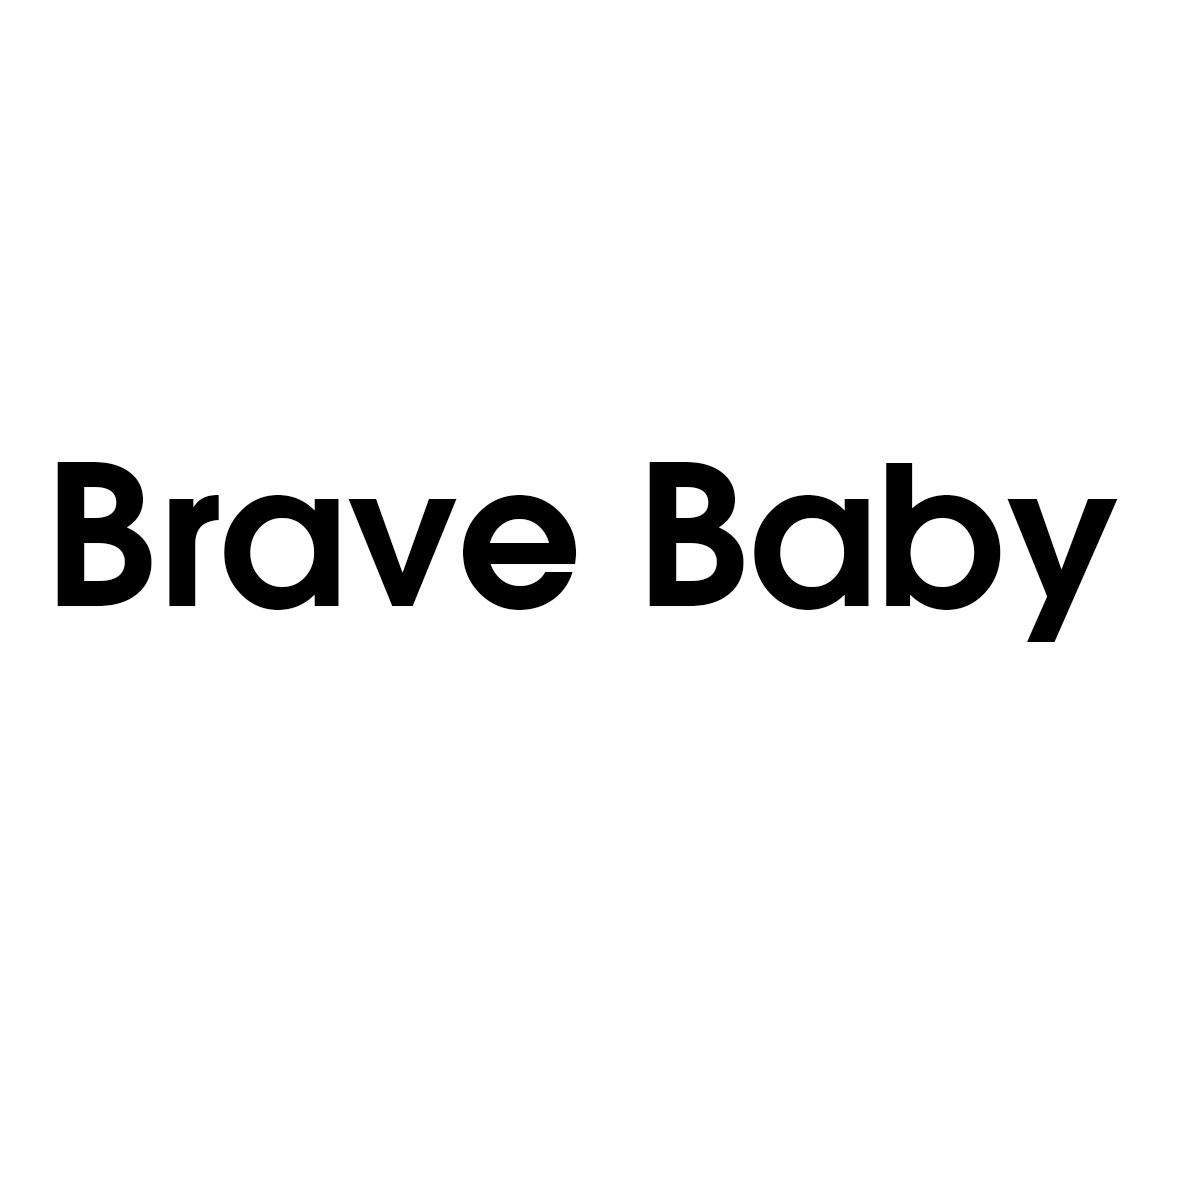 Brave Baby